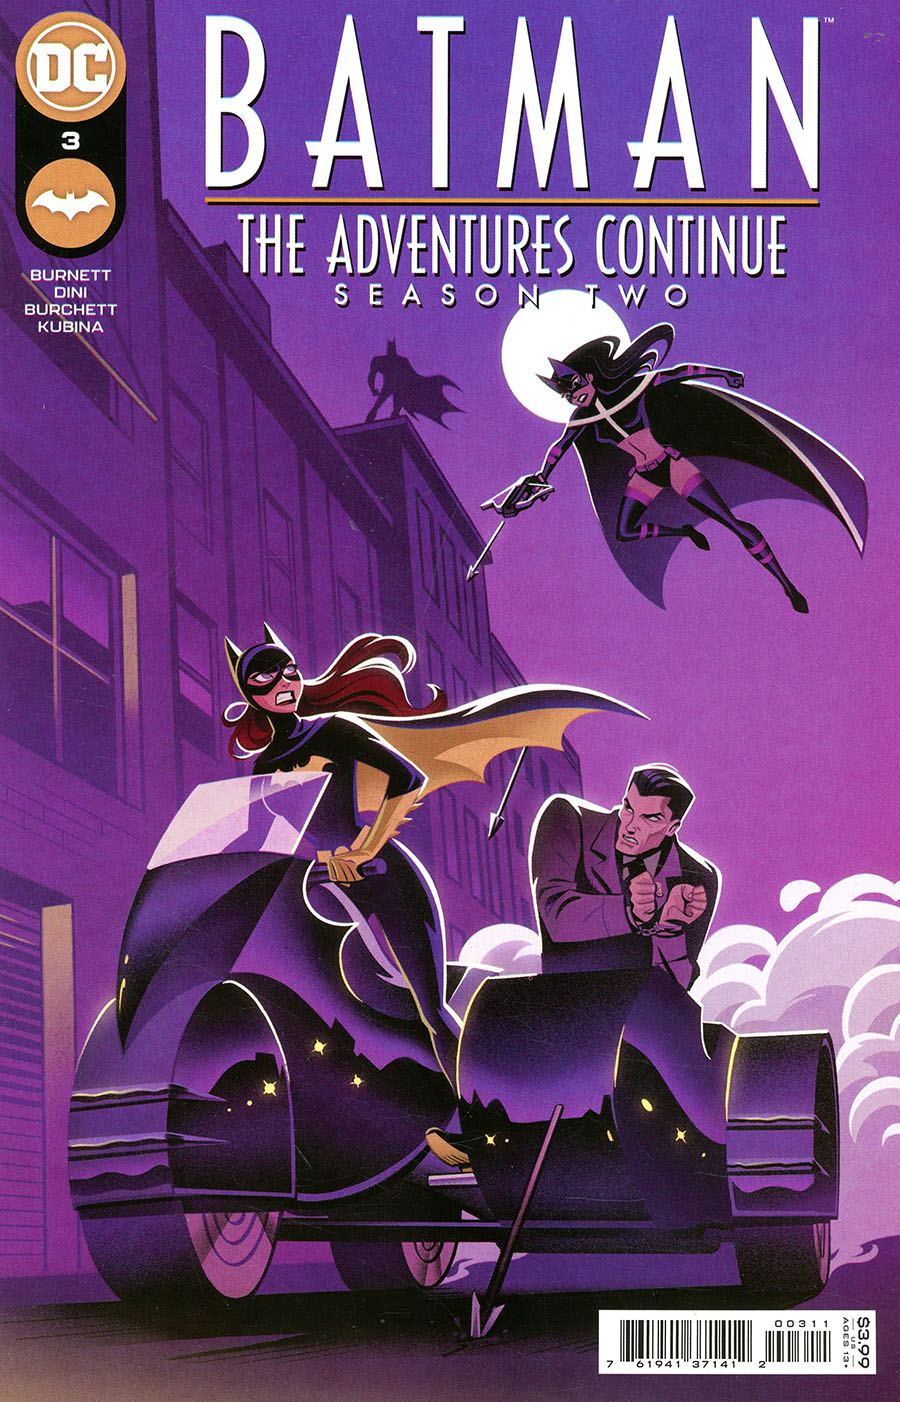 Batman The Adventures Continue Season II #3 Cover A Regular Stephanie Pepper Cover